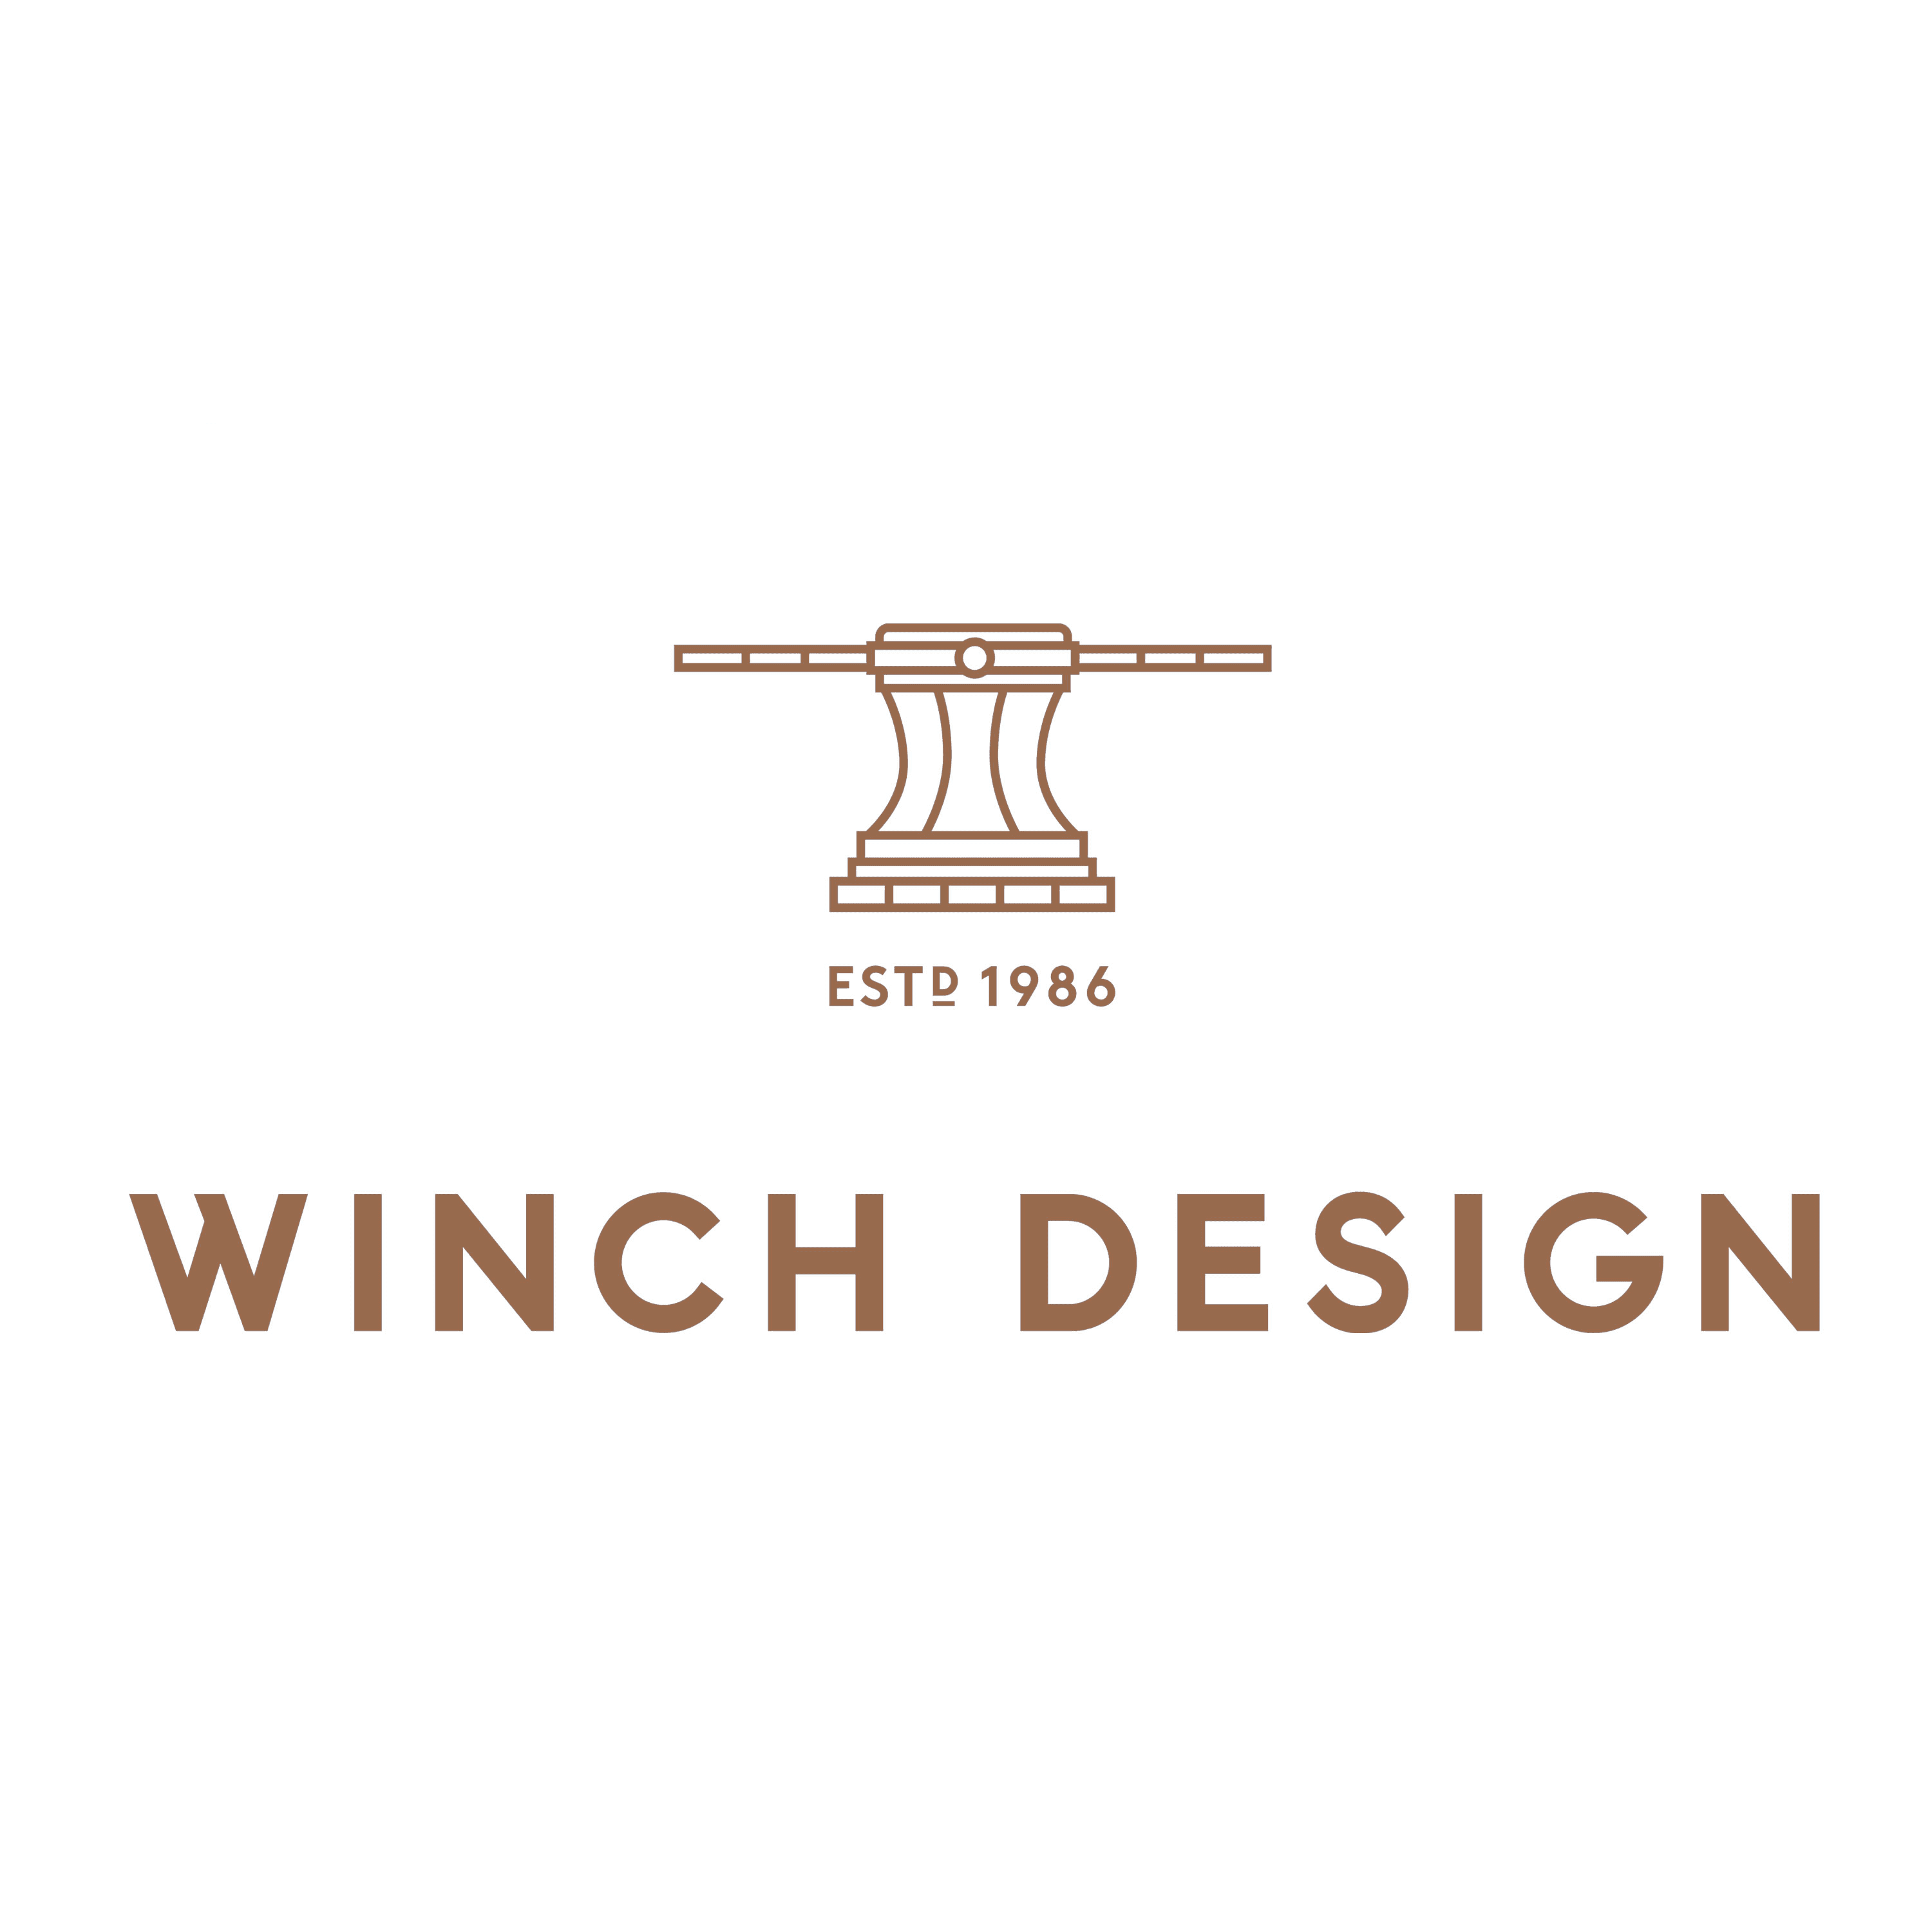 WinchDesign